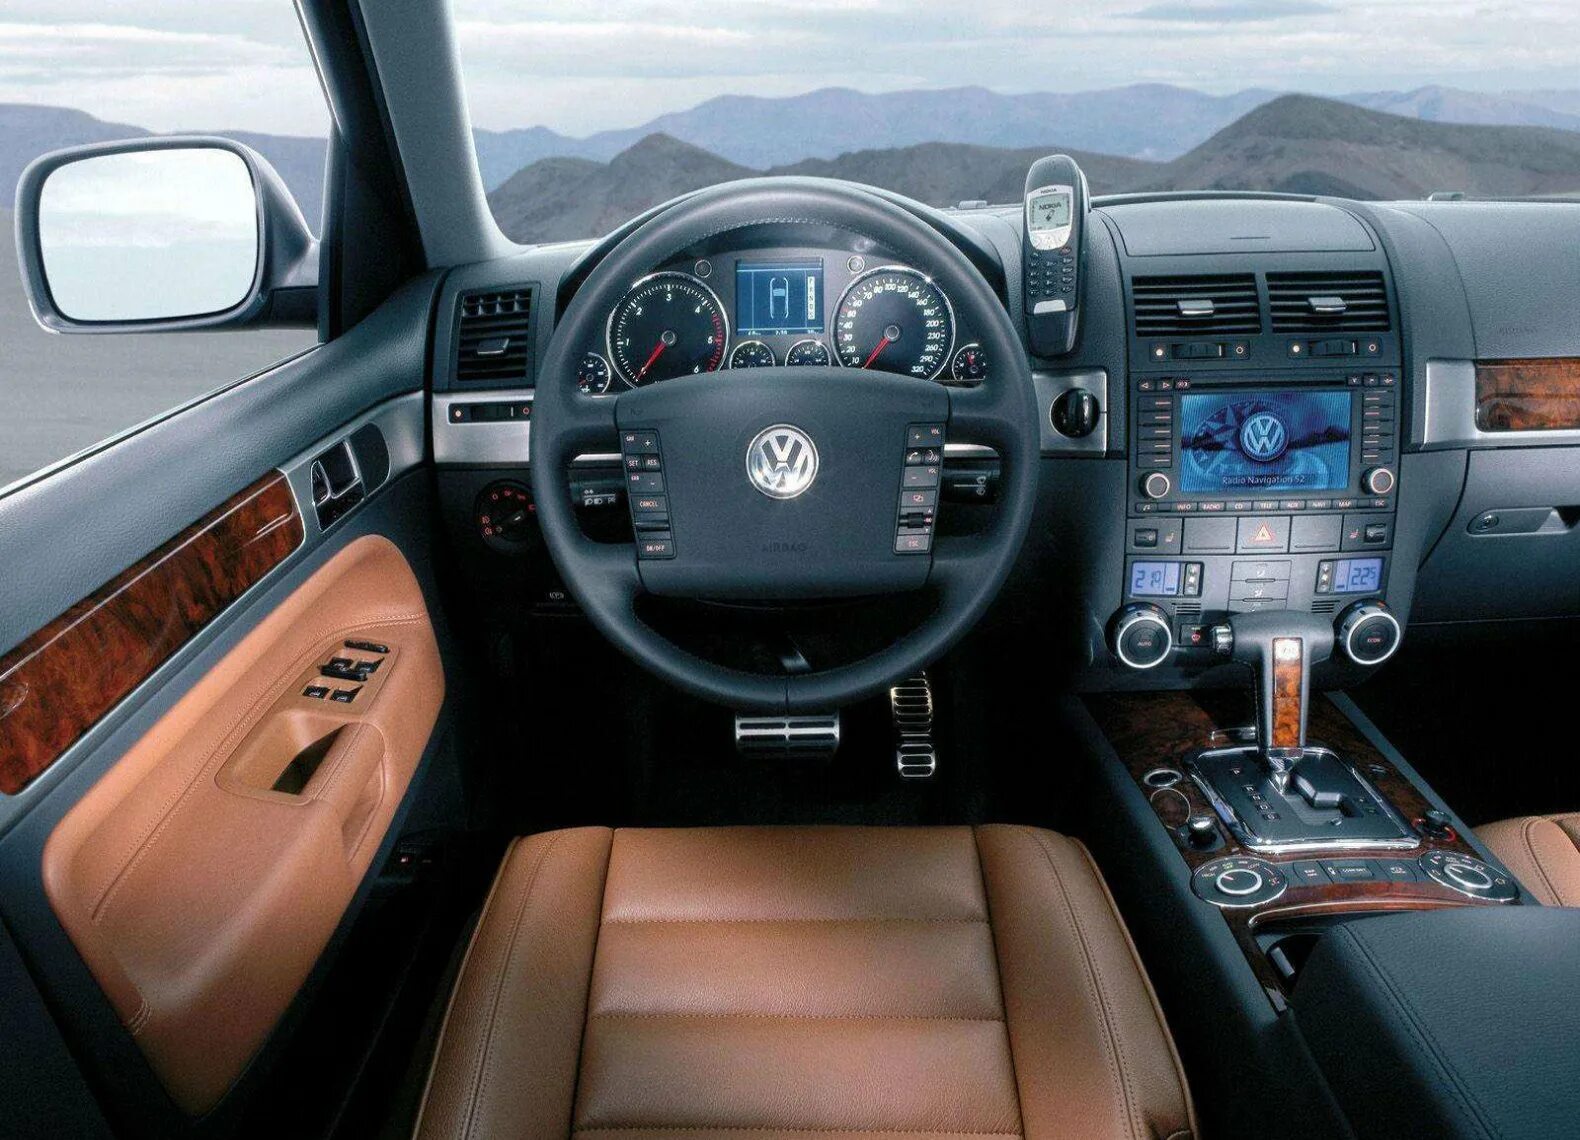 Volkswagen touareg 2002. Фольксваген Туарег 1. Volkswagen Touareg 2008 Interior. Volkswagen Touareg i 2002-2010. Фольксваген Туарег 2004 салон.